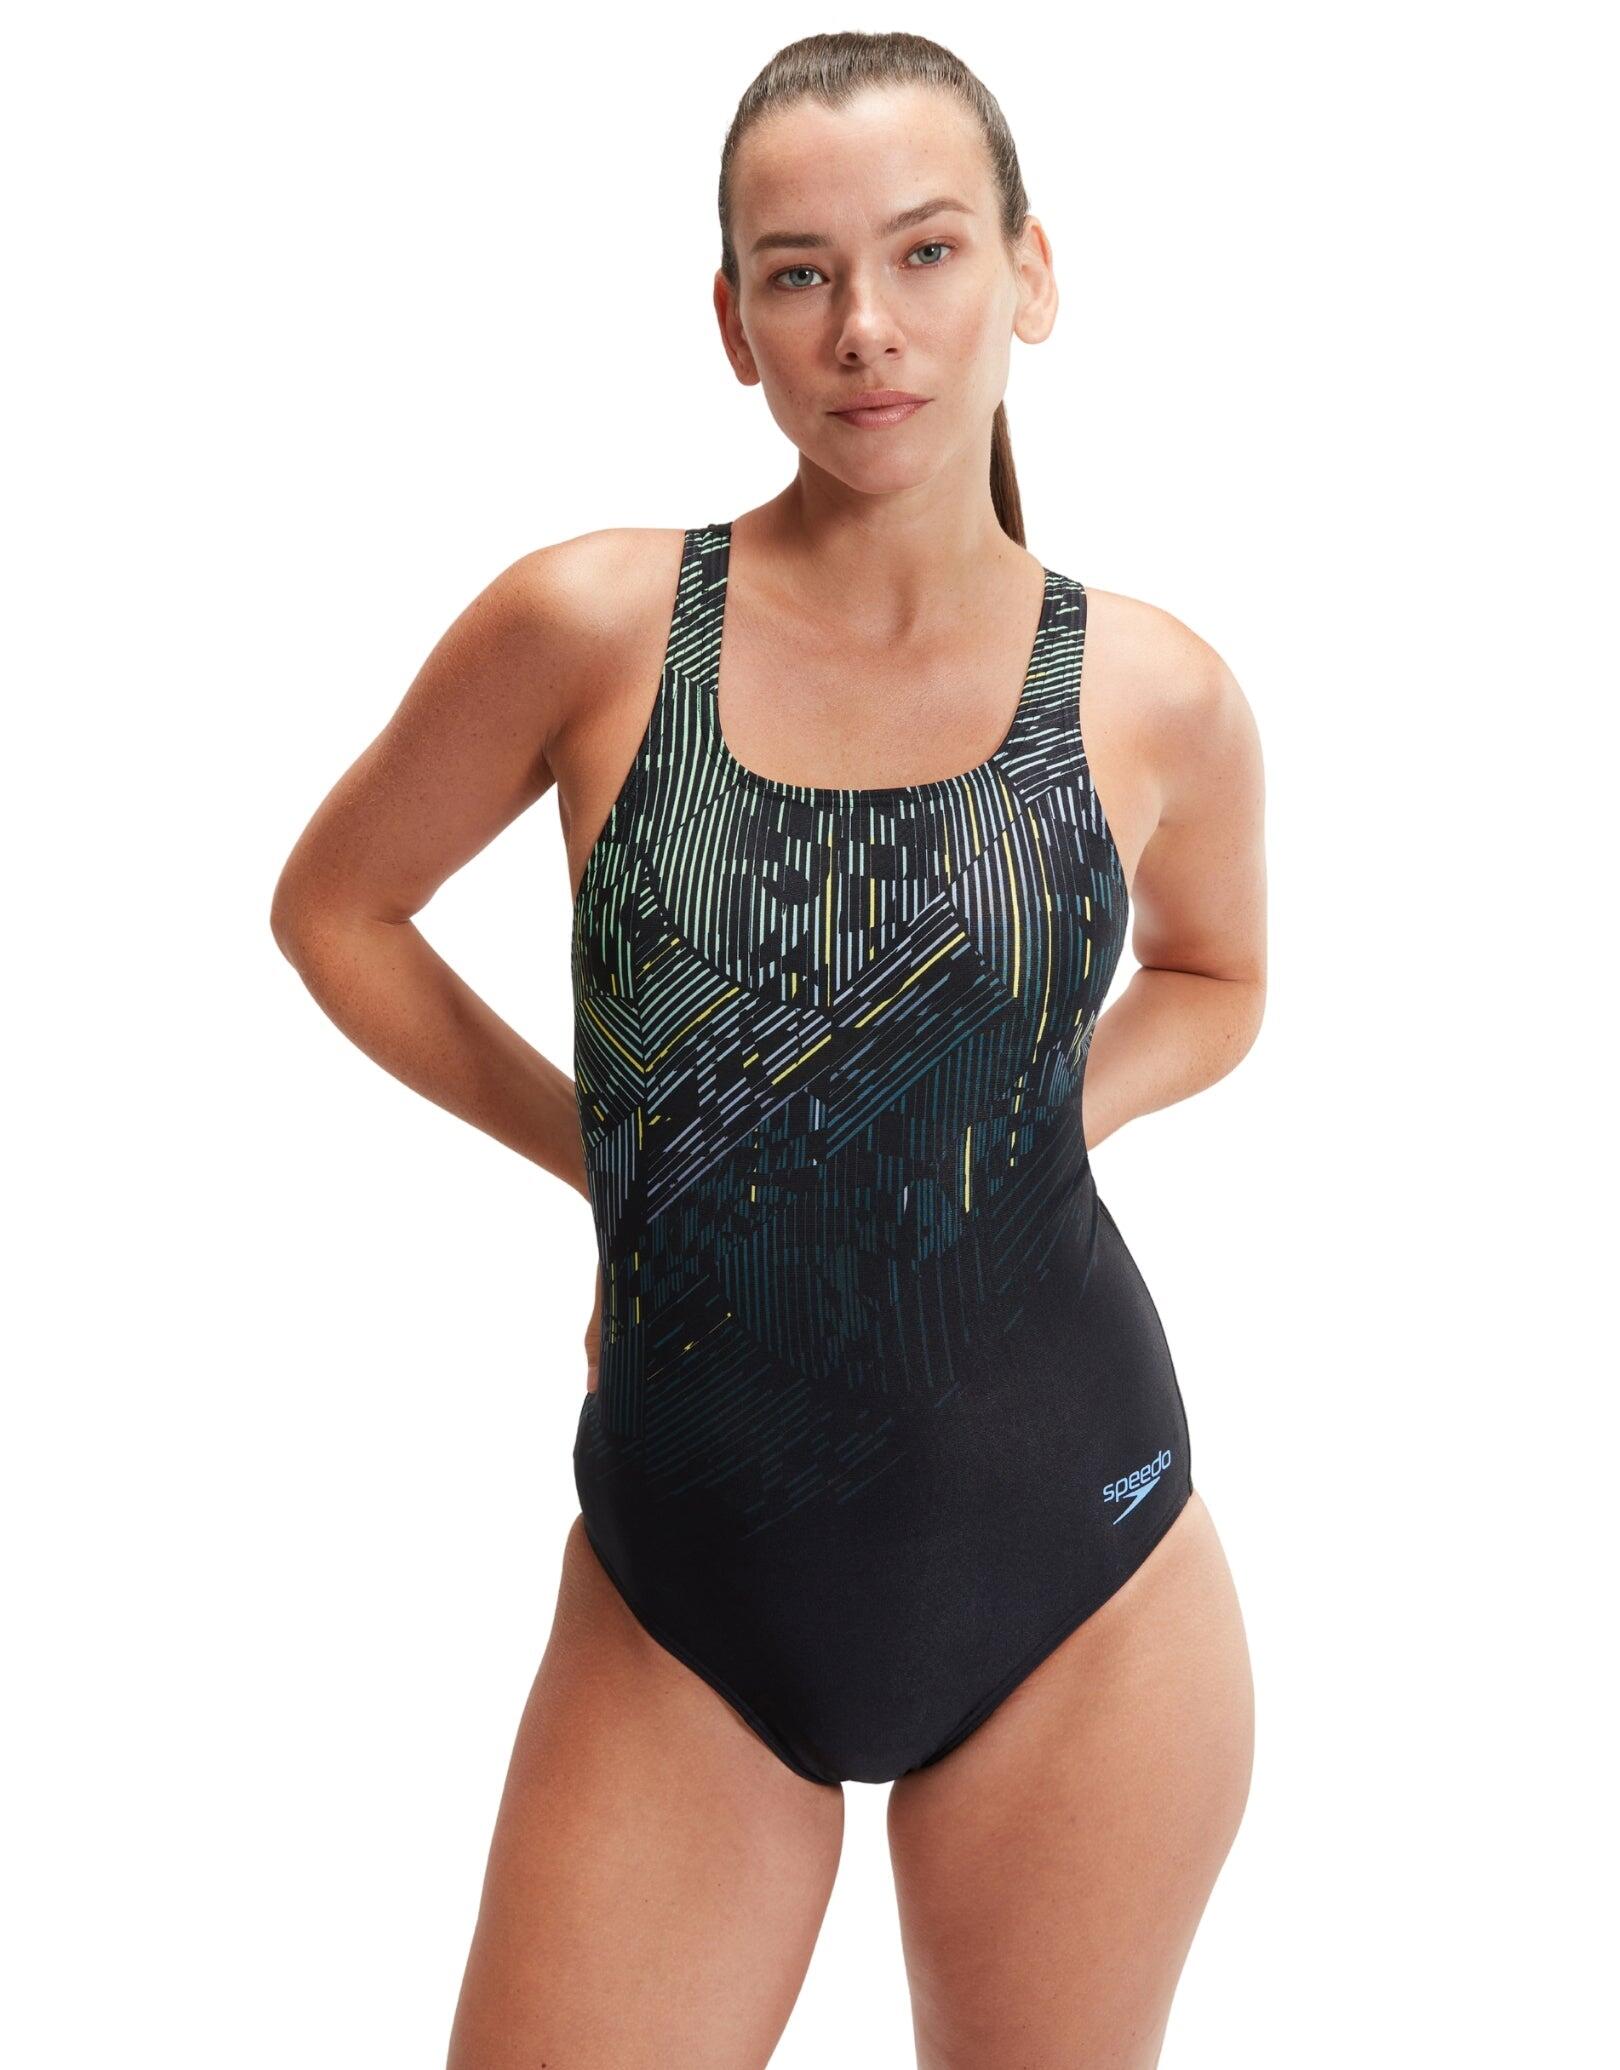 SPEEDO Speedo Digital Printed Medalist Swimsuit - Black/Green